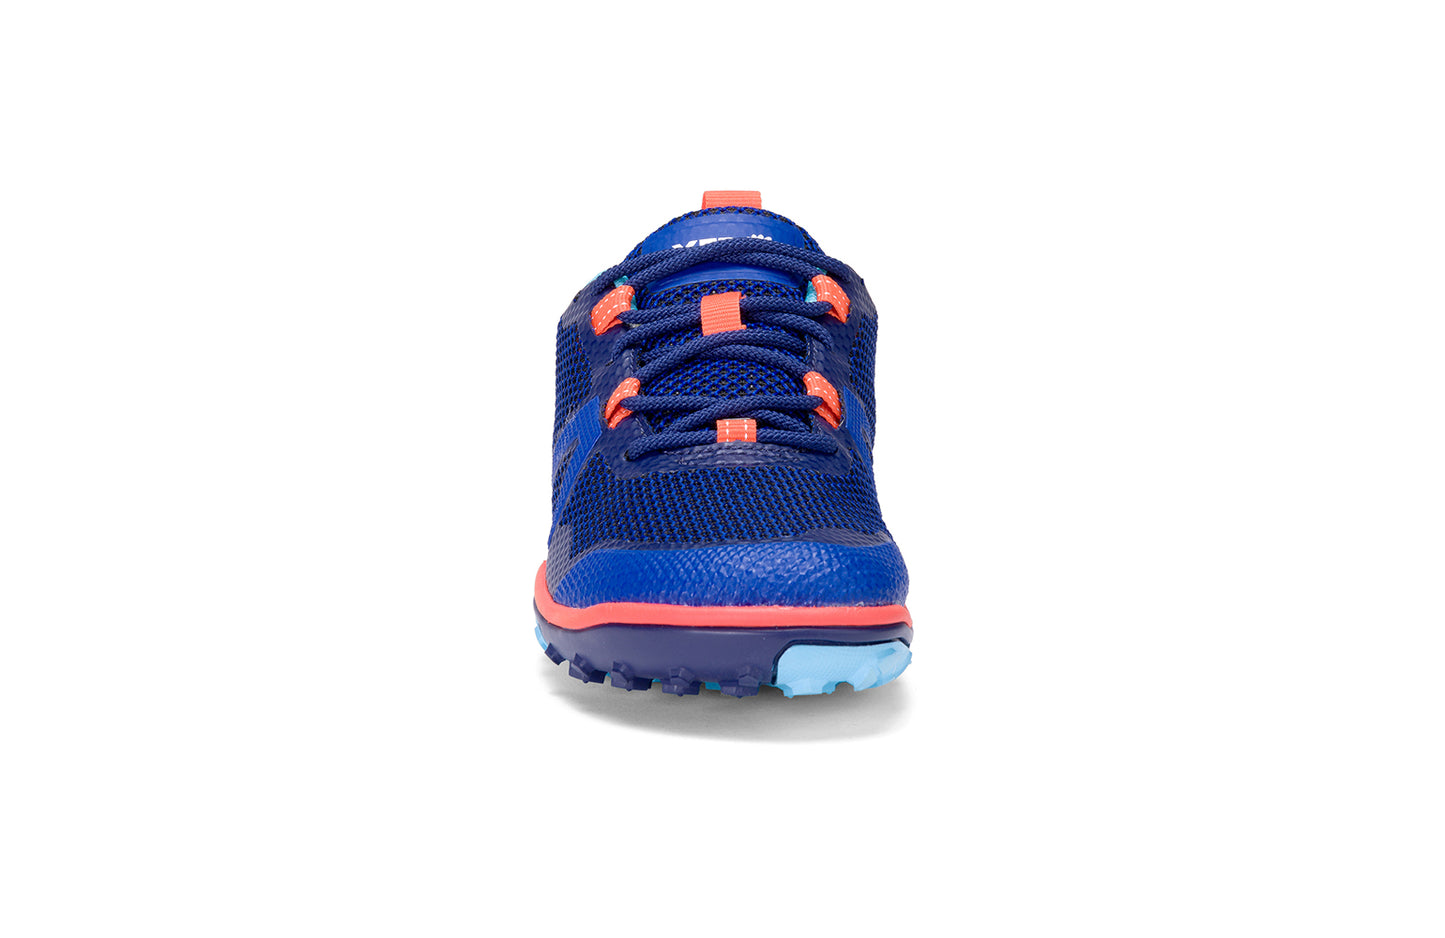 Xero Shoes - Scrambler Low - Sodalite Blue/Orange - Women's